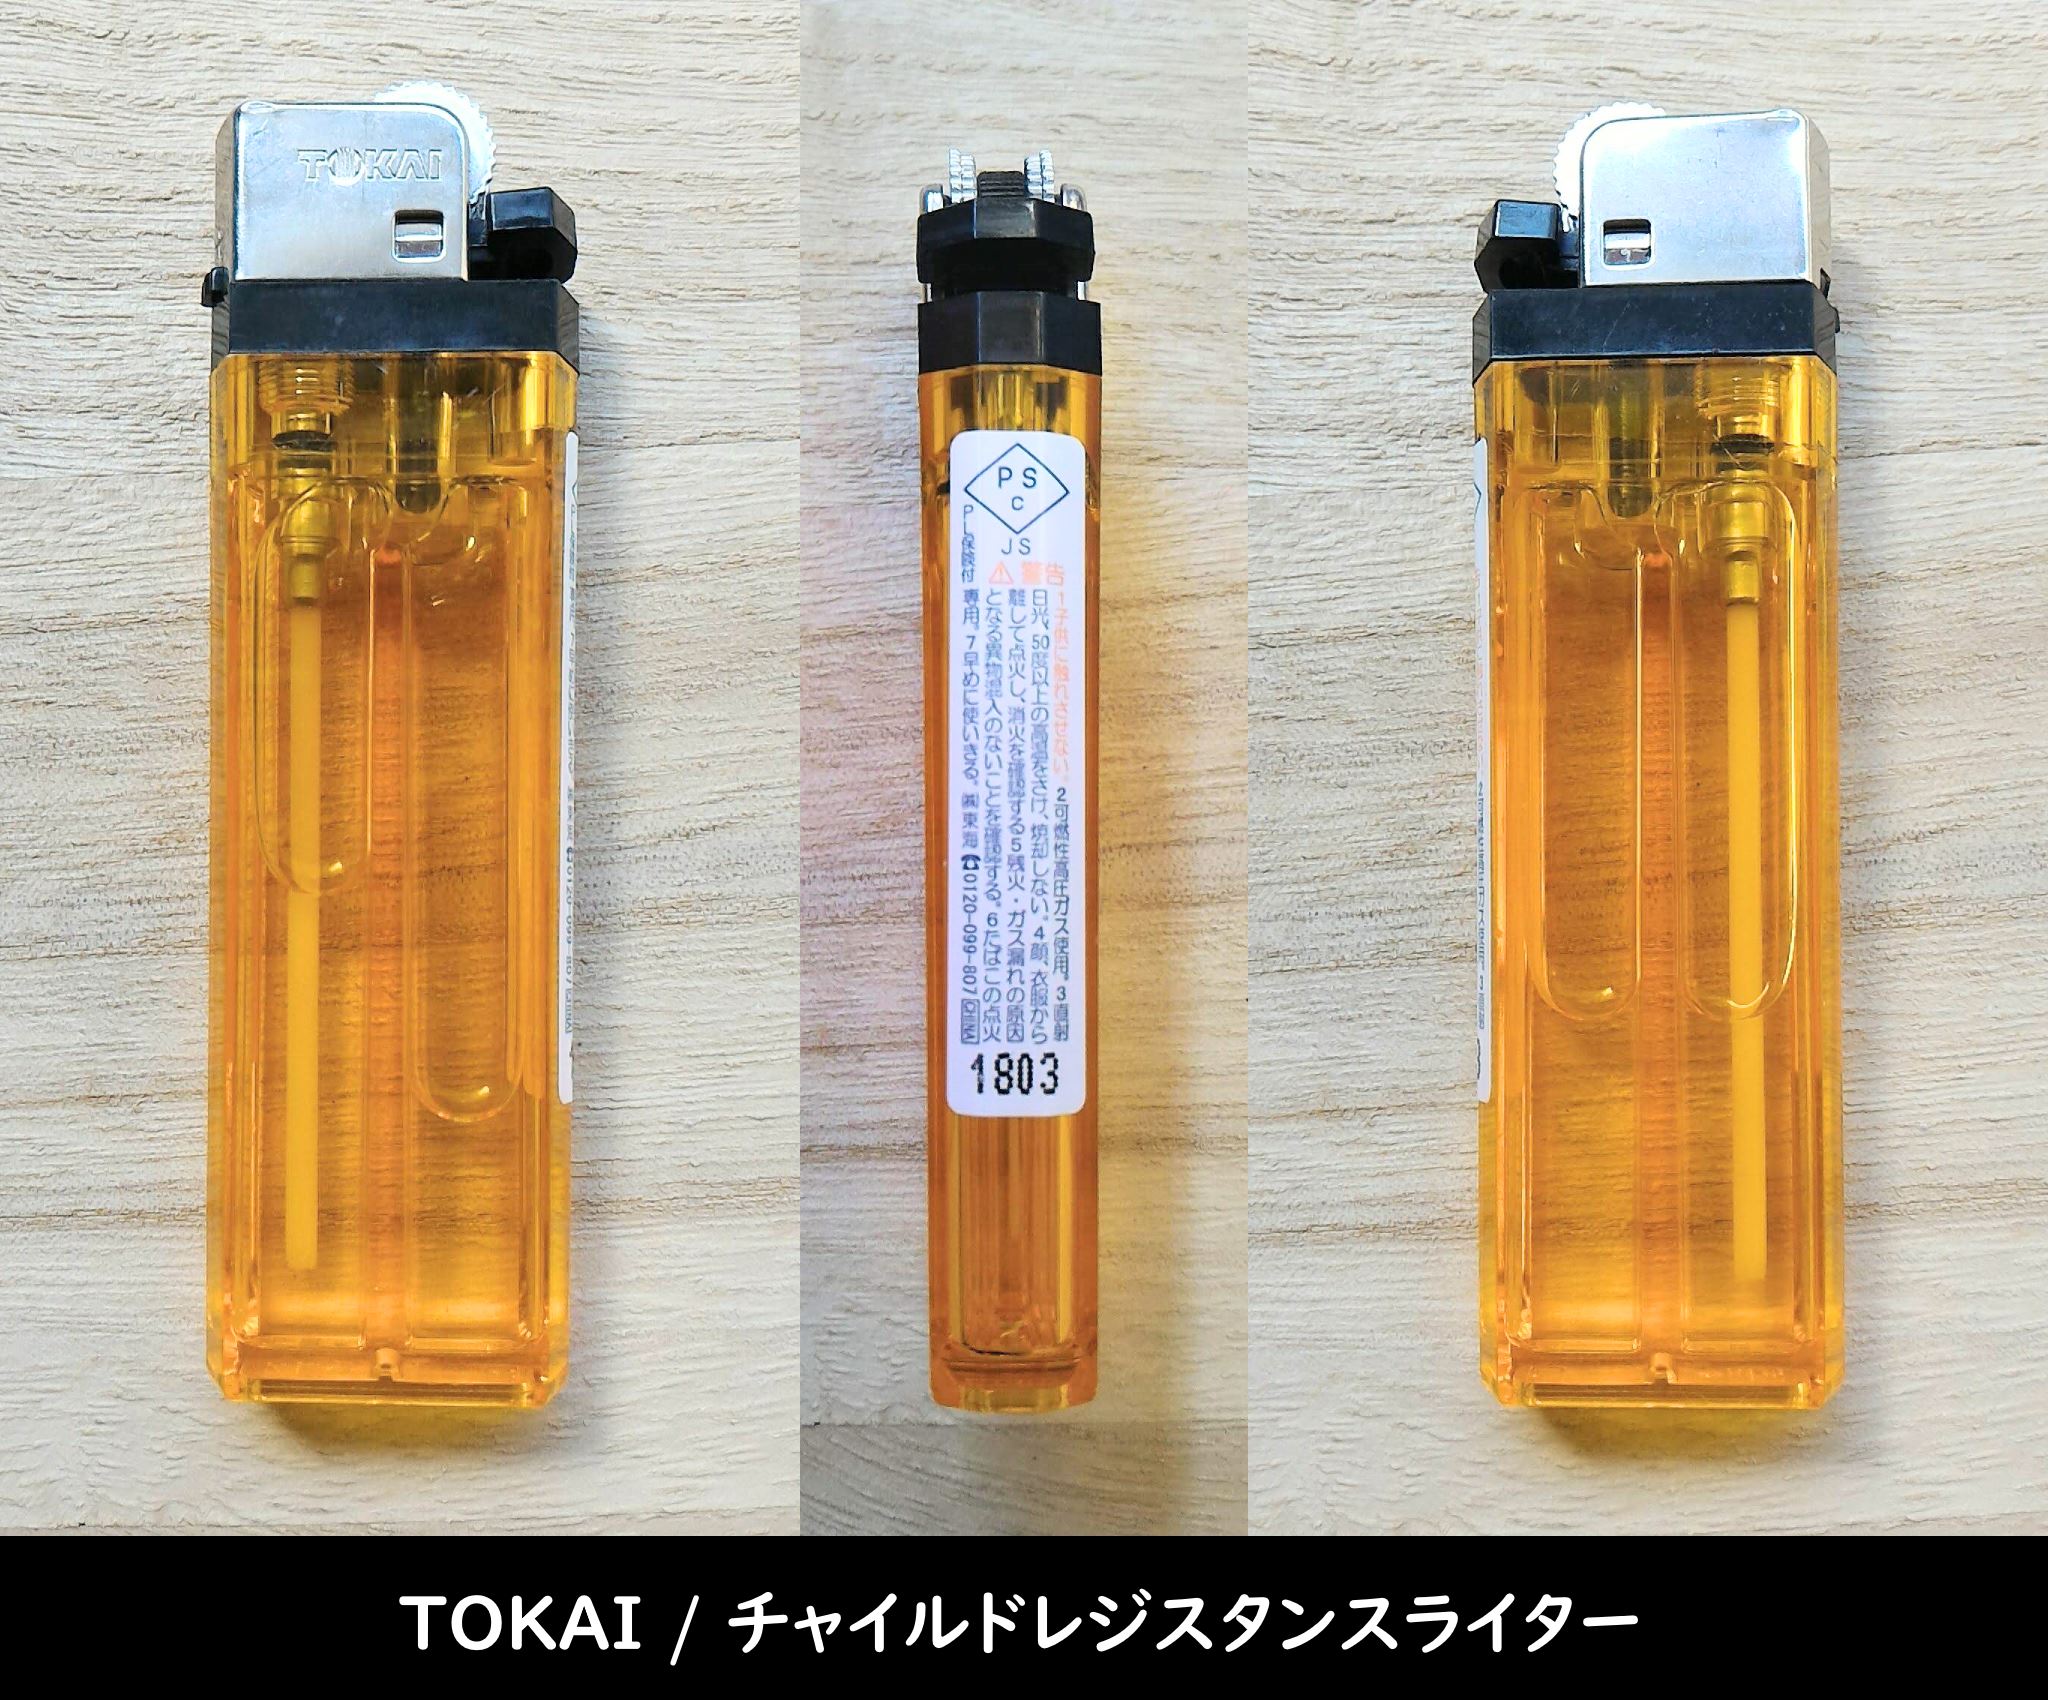 TOKAI / チャイルドレジスタンスライター の個体